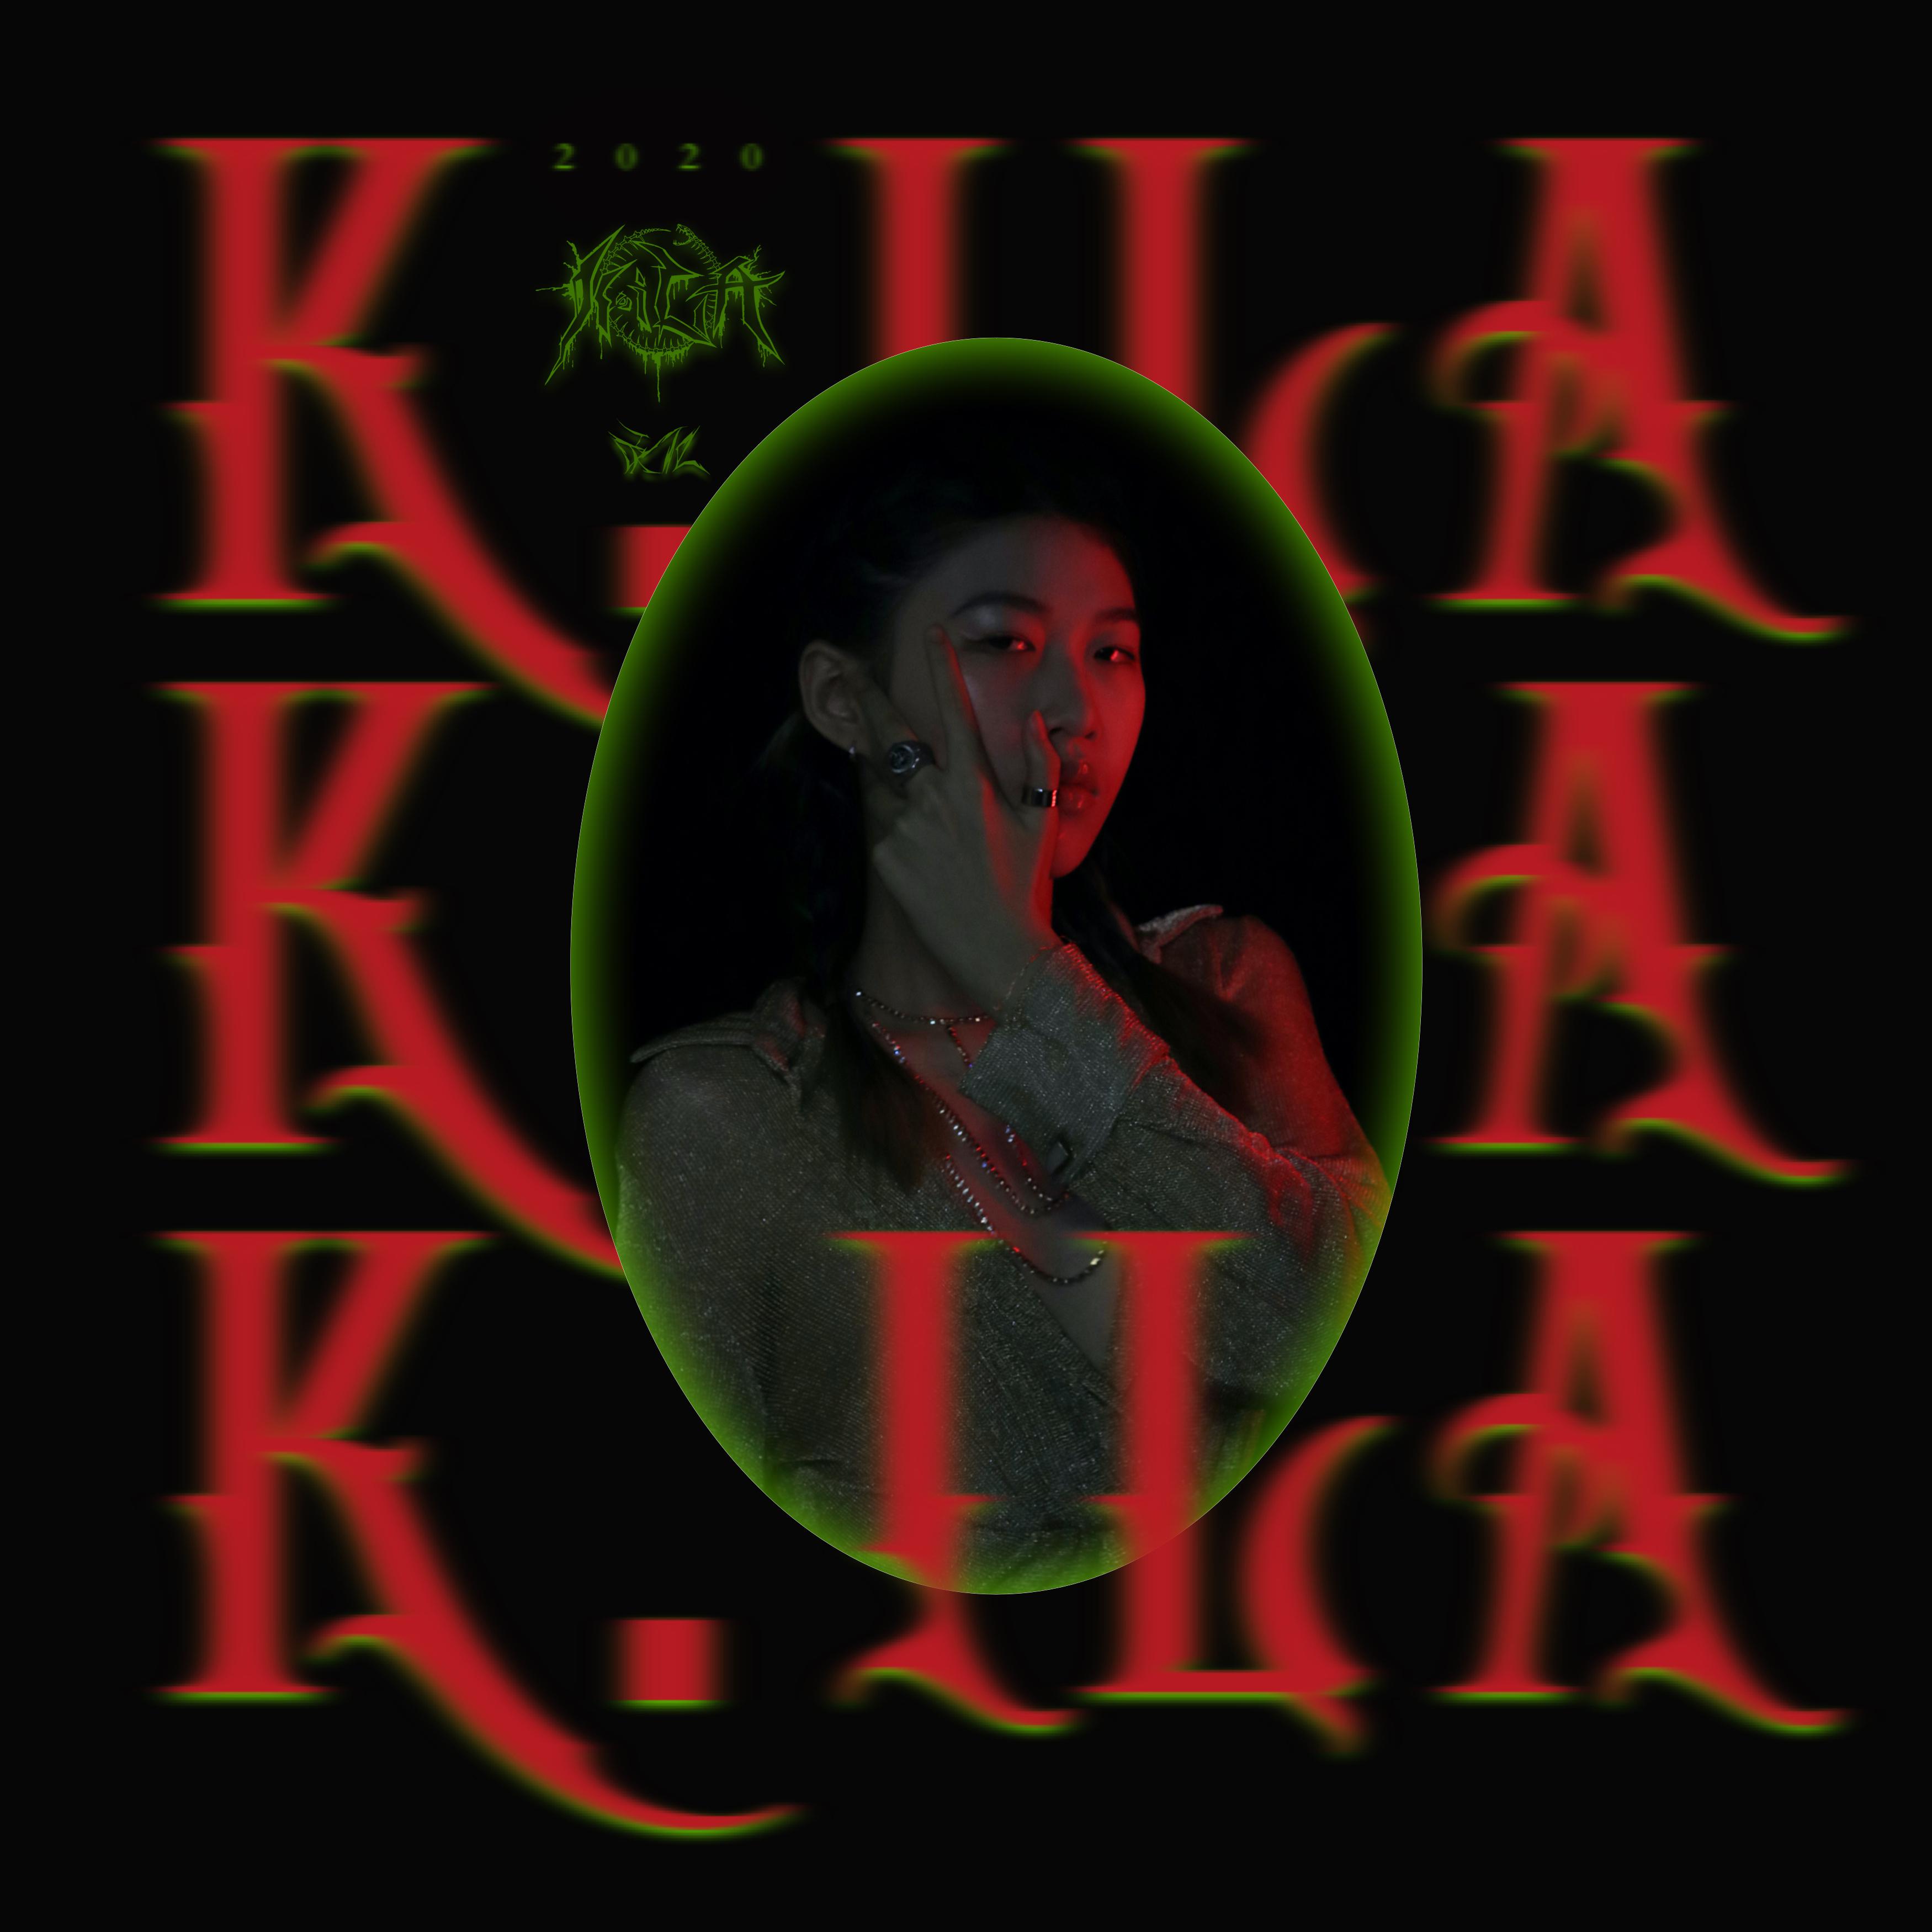 All Fake It歌词 歌手K.ila / Lt / 戾仁Lyrin-专辑K.ILA-单曲《All Fake It》LRC歌词下载